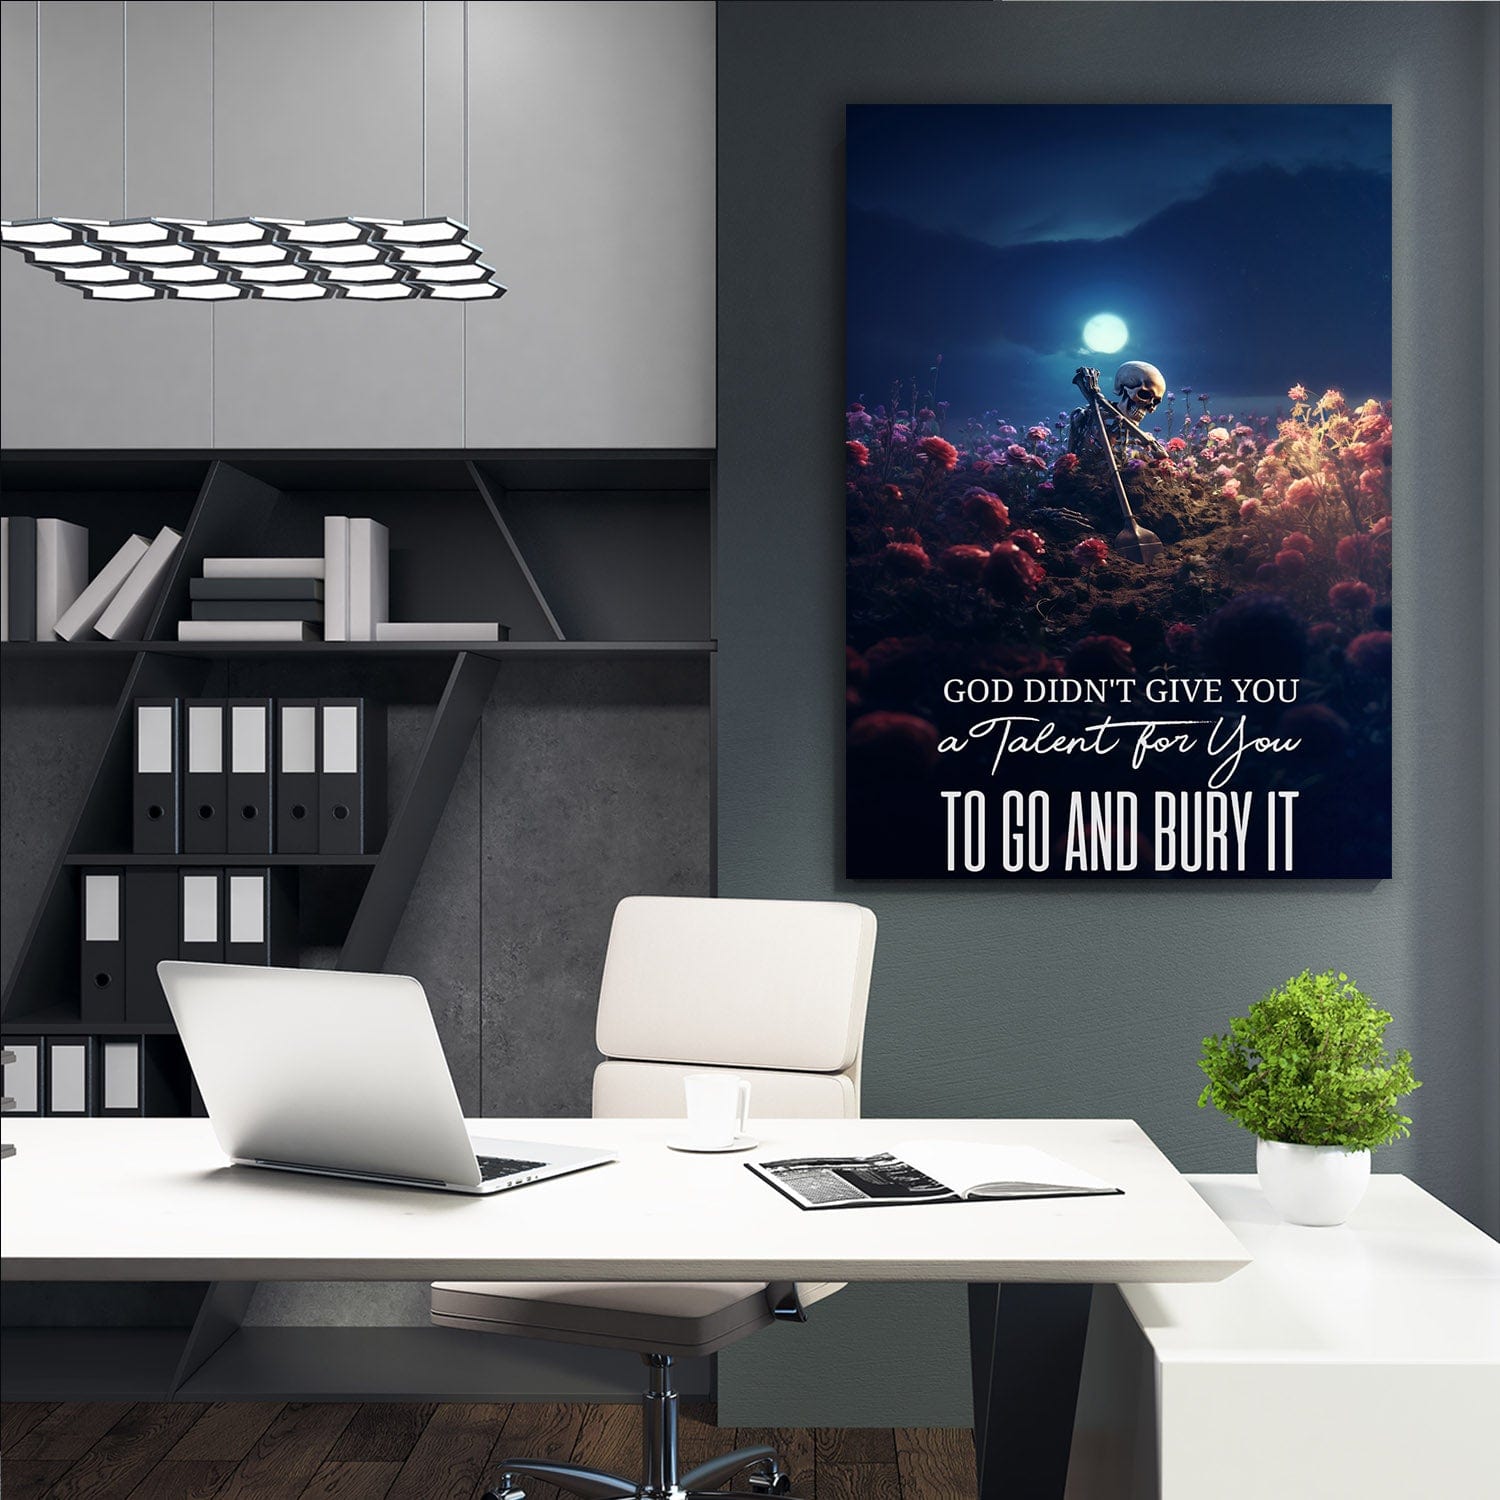 Don't Bury Your Talent Wall Art | Inspirational Wall Art Motivational Wall Art Quotes Office Art | ImpaktMaker Exclusive Canvas Art Portrait